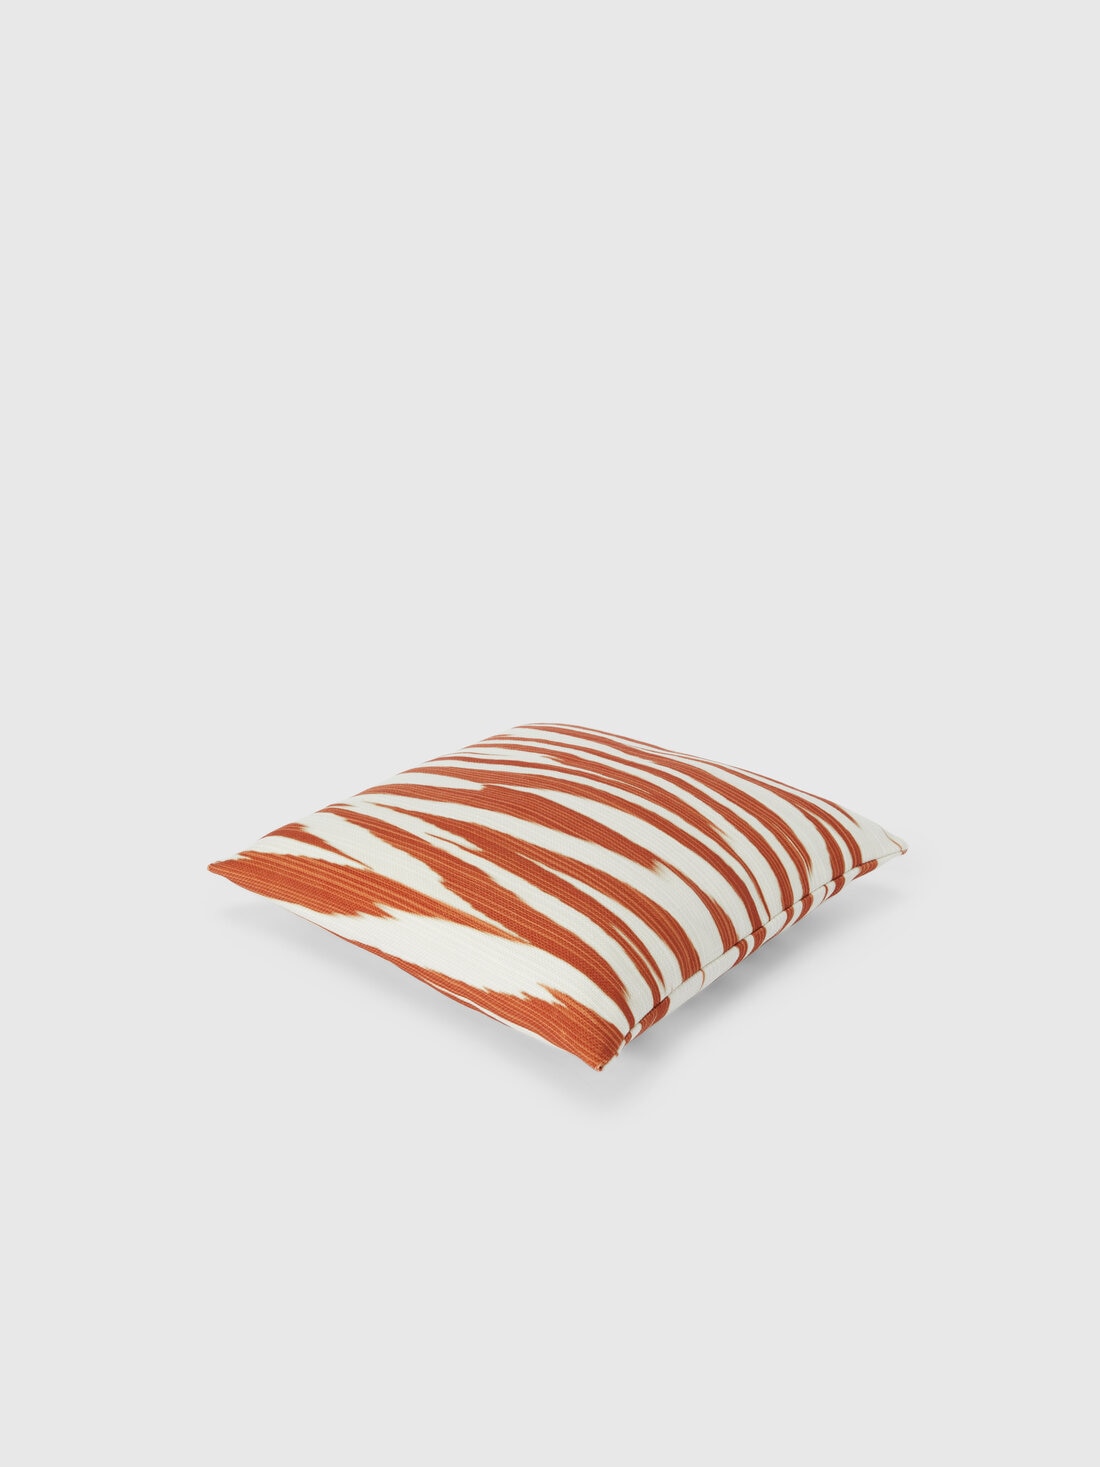 Atacama outdoor cushion 40x40 cm, Orange - 8051275499558 - 1